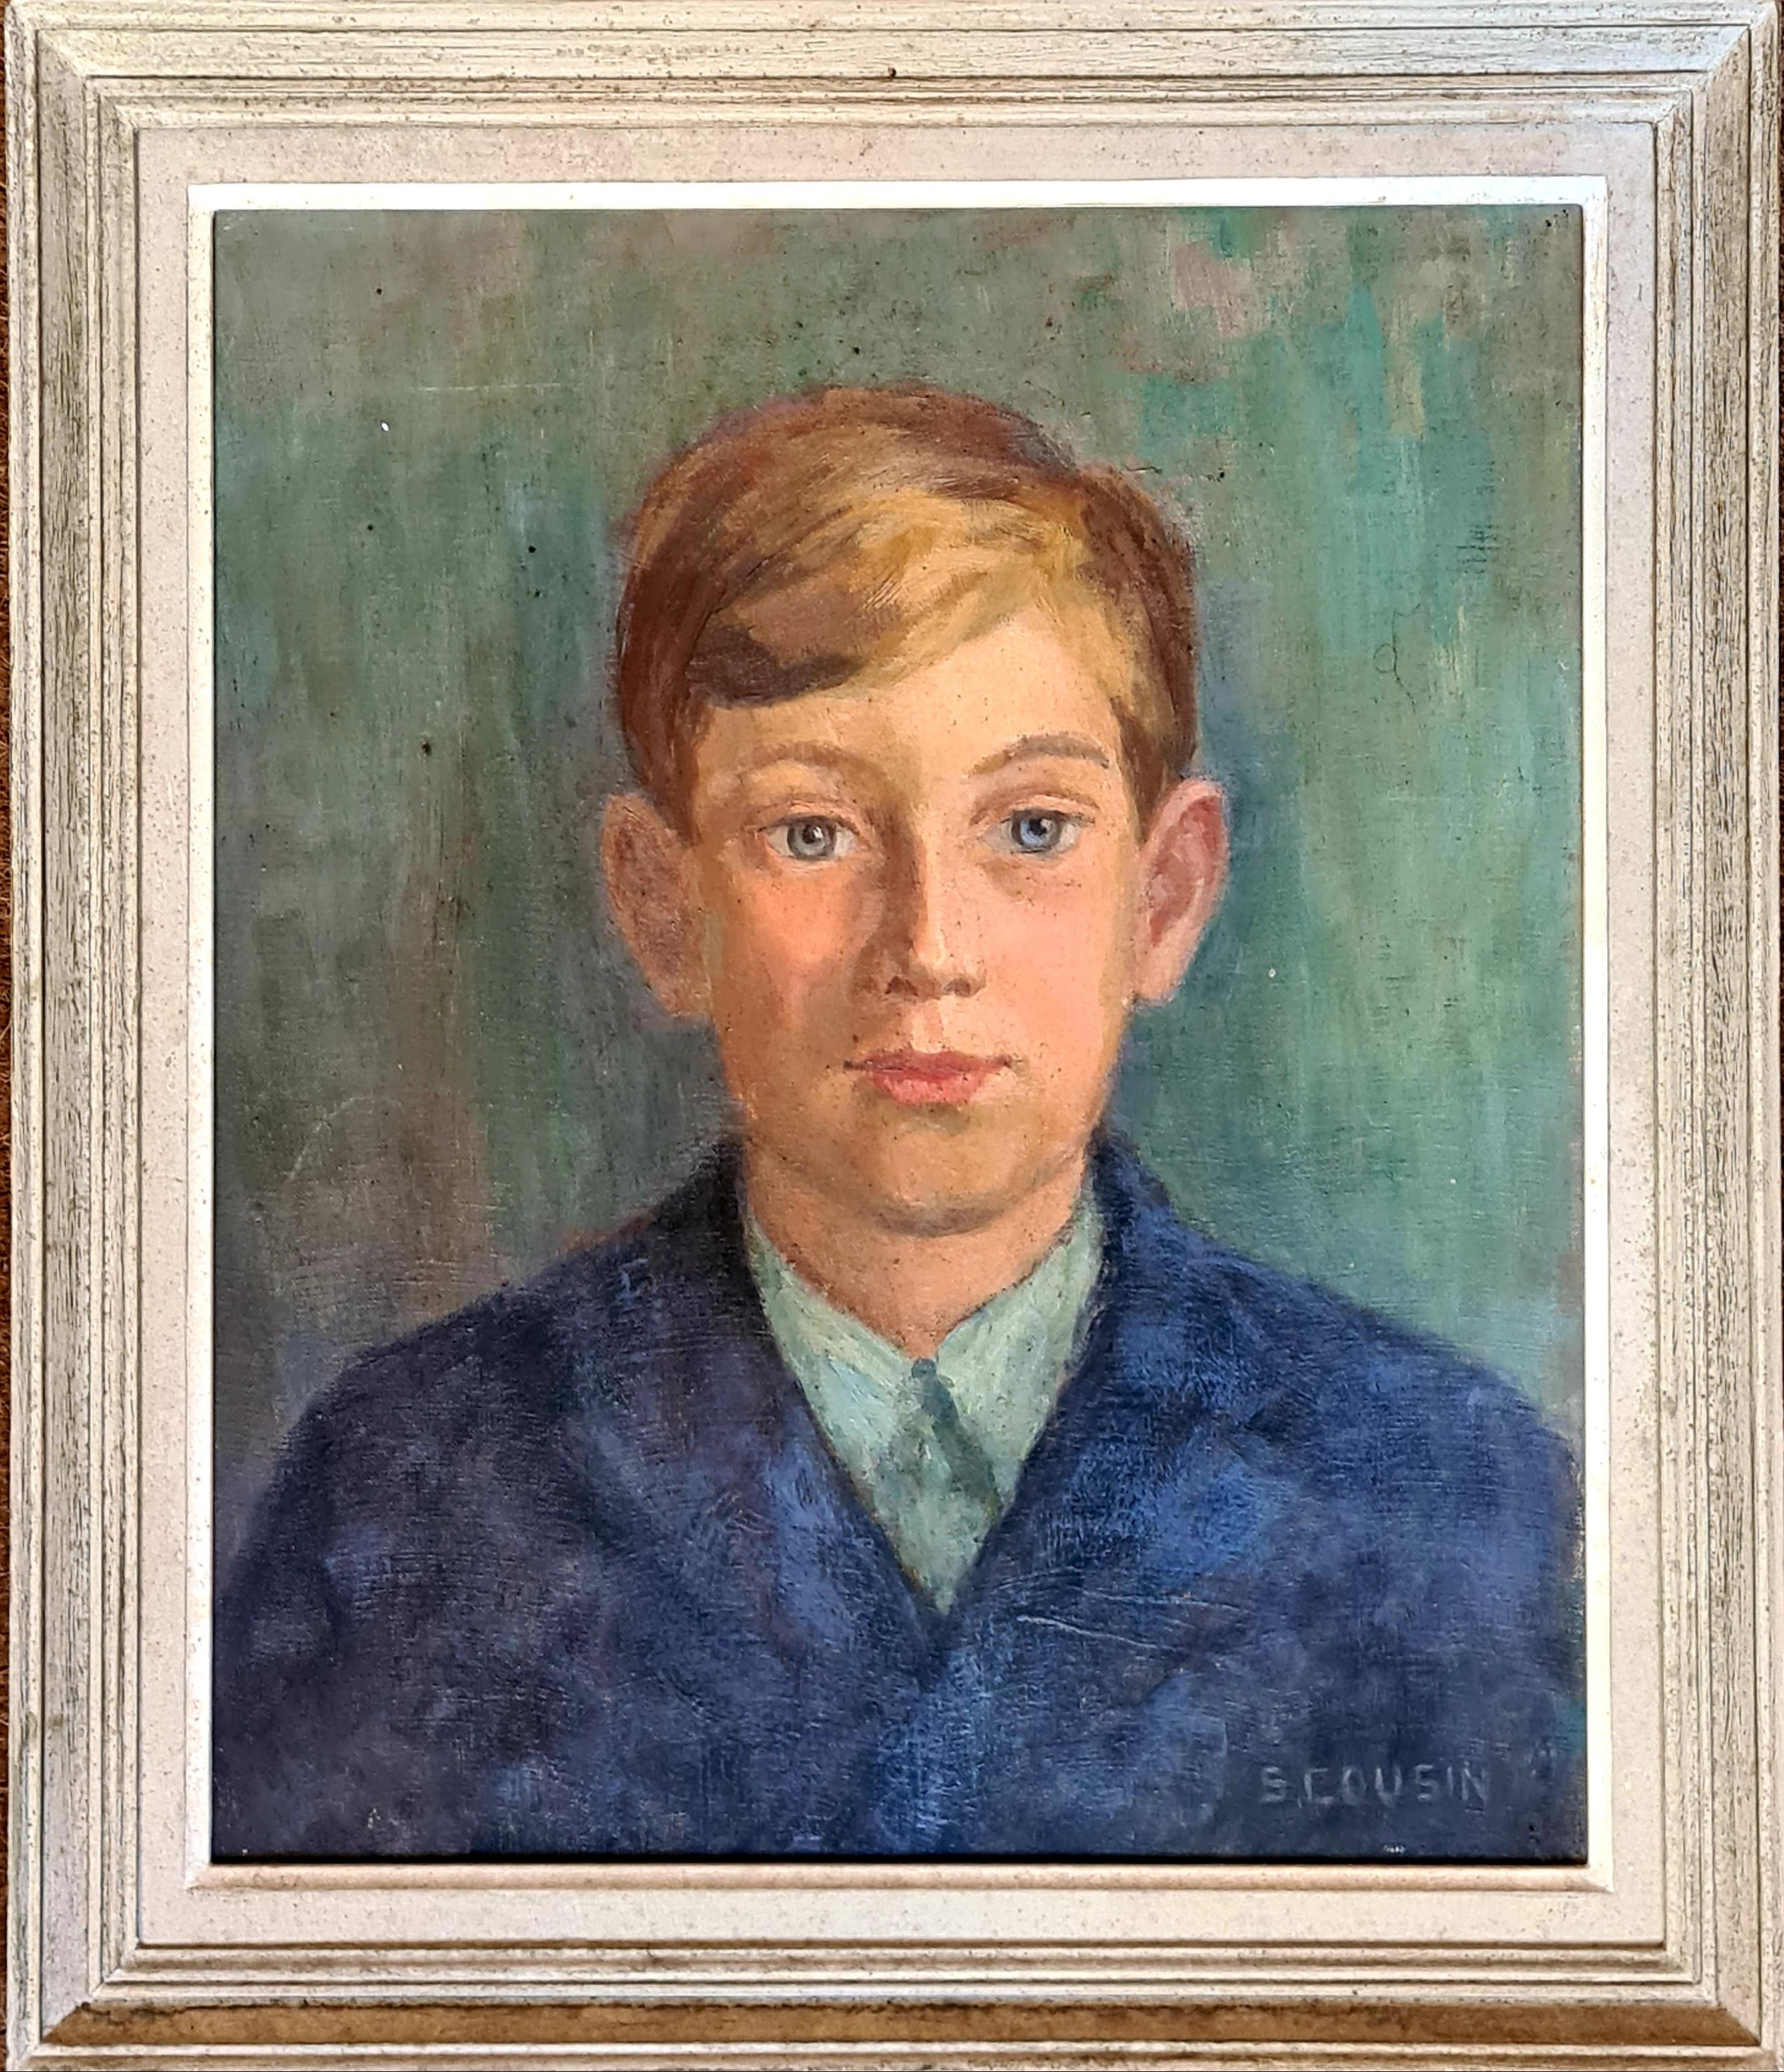 S Cousin Portrait Painting – Ölgemälde auf Leinwand, Porträt des Sohnes des Künstlers, 1930er Jahre